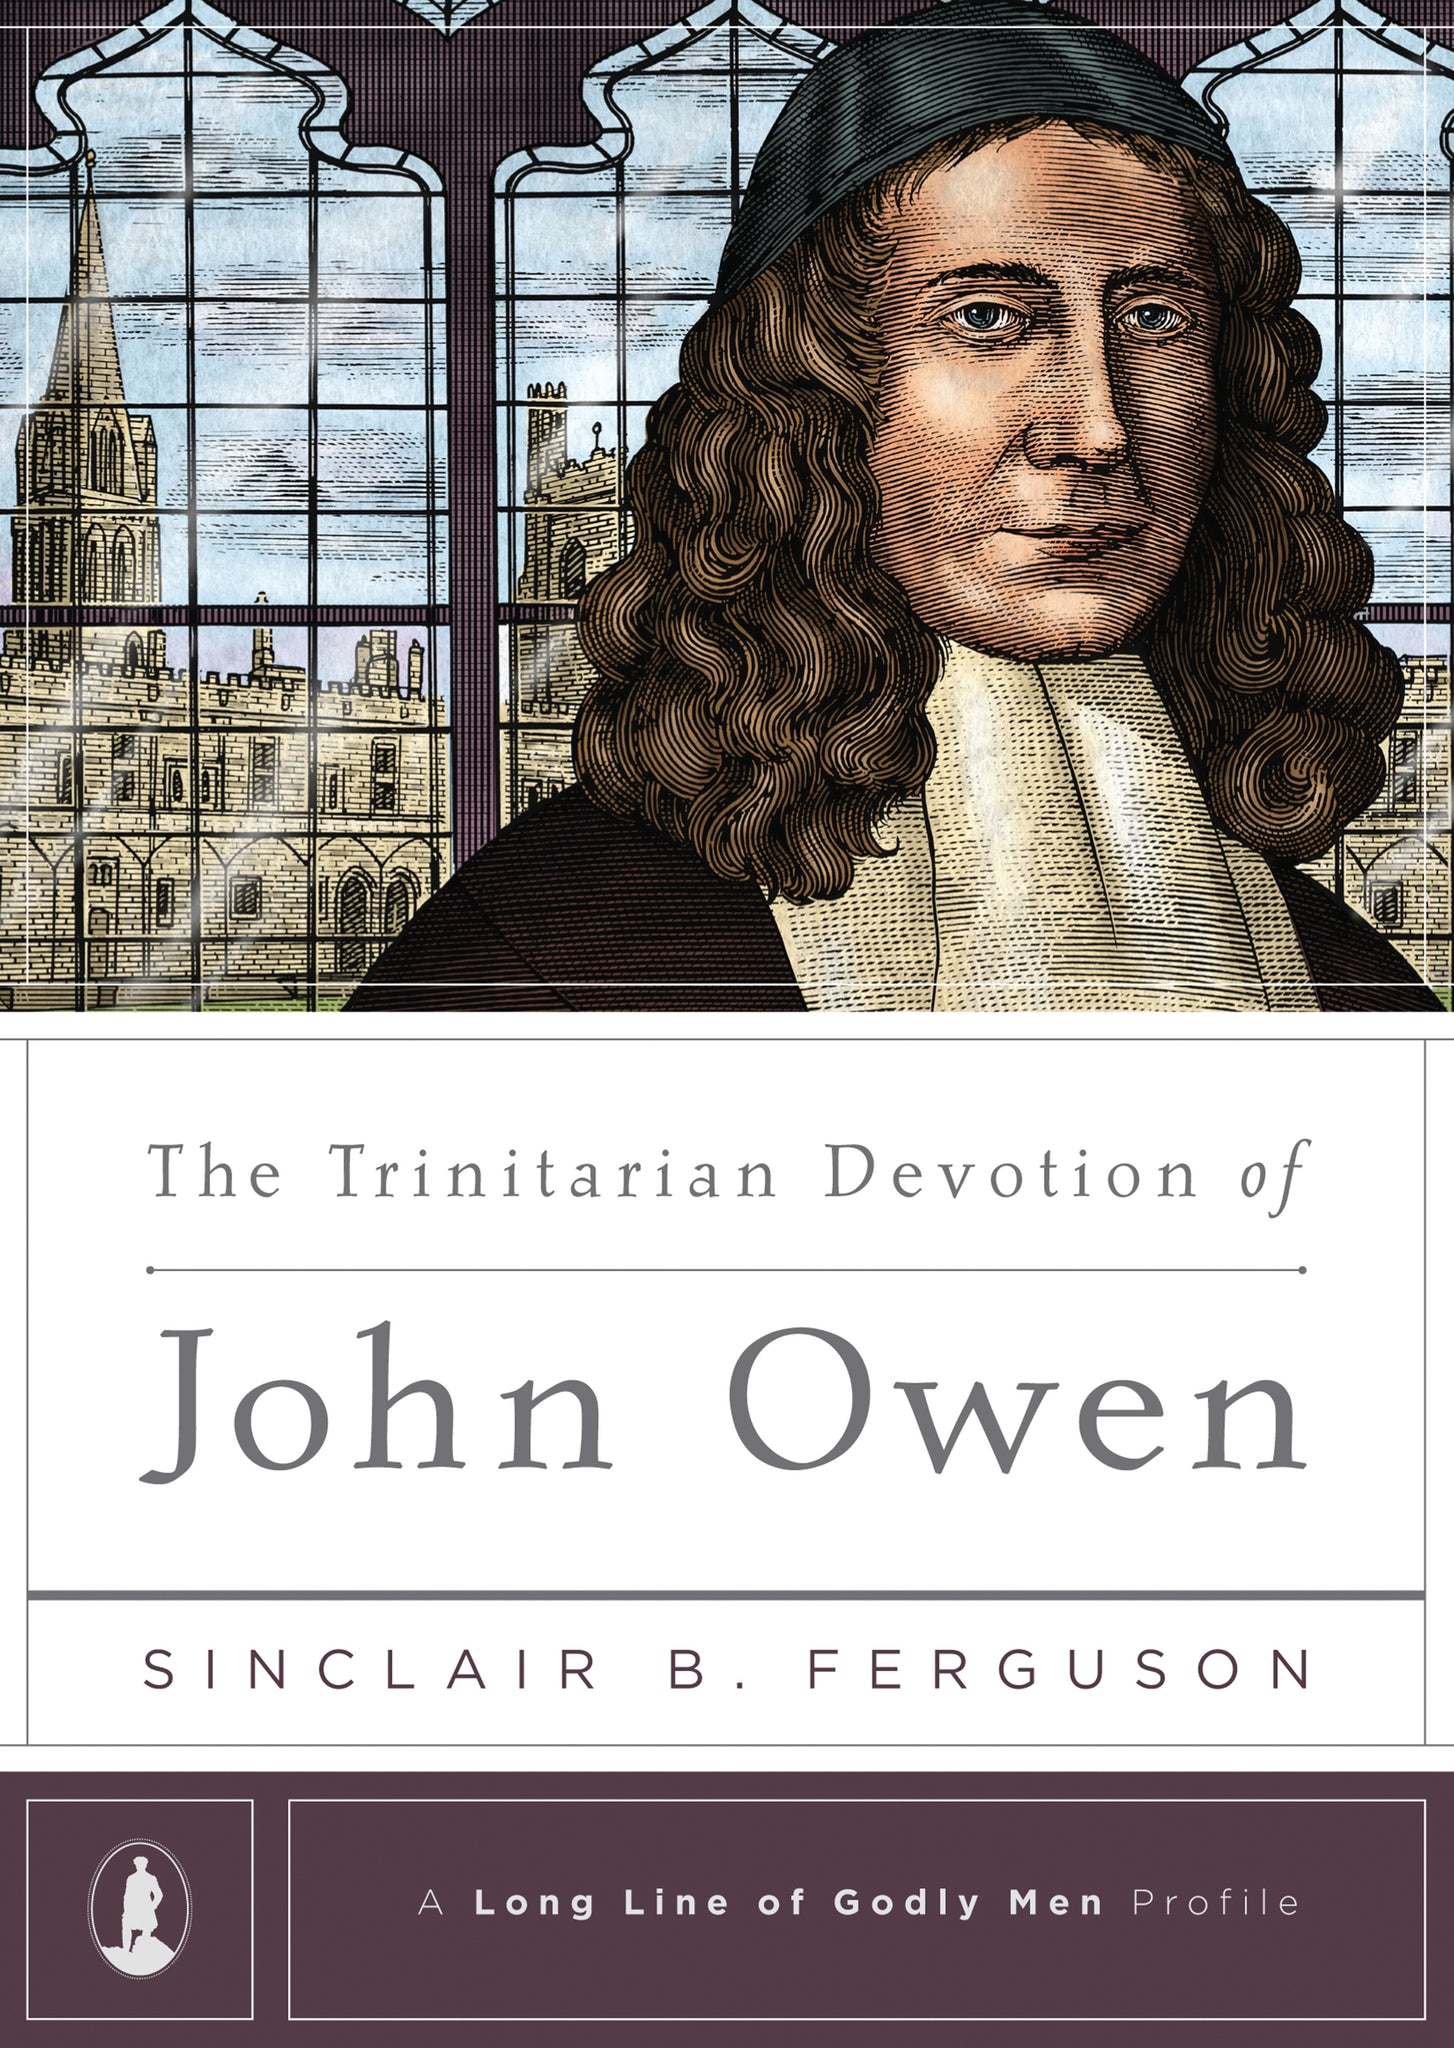 A Long Line of Godly Men - The Trinitarian Devotion of John Owen